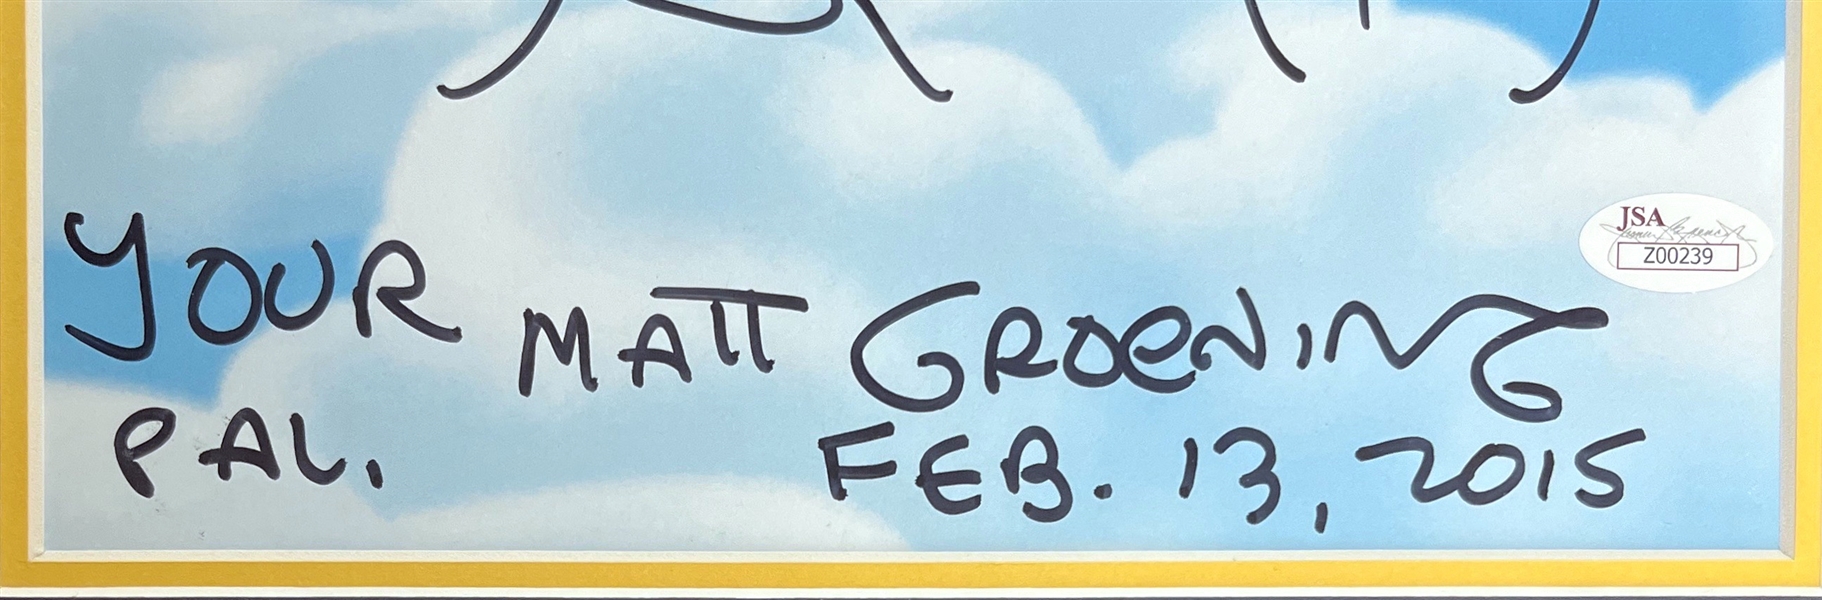 Matt Groening Signed Photo w/ Bart Sketch in Custom Display (JSA LOA)